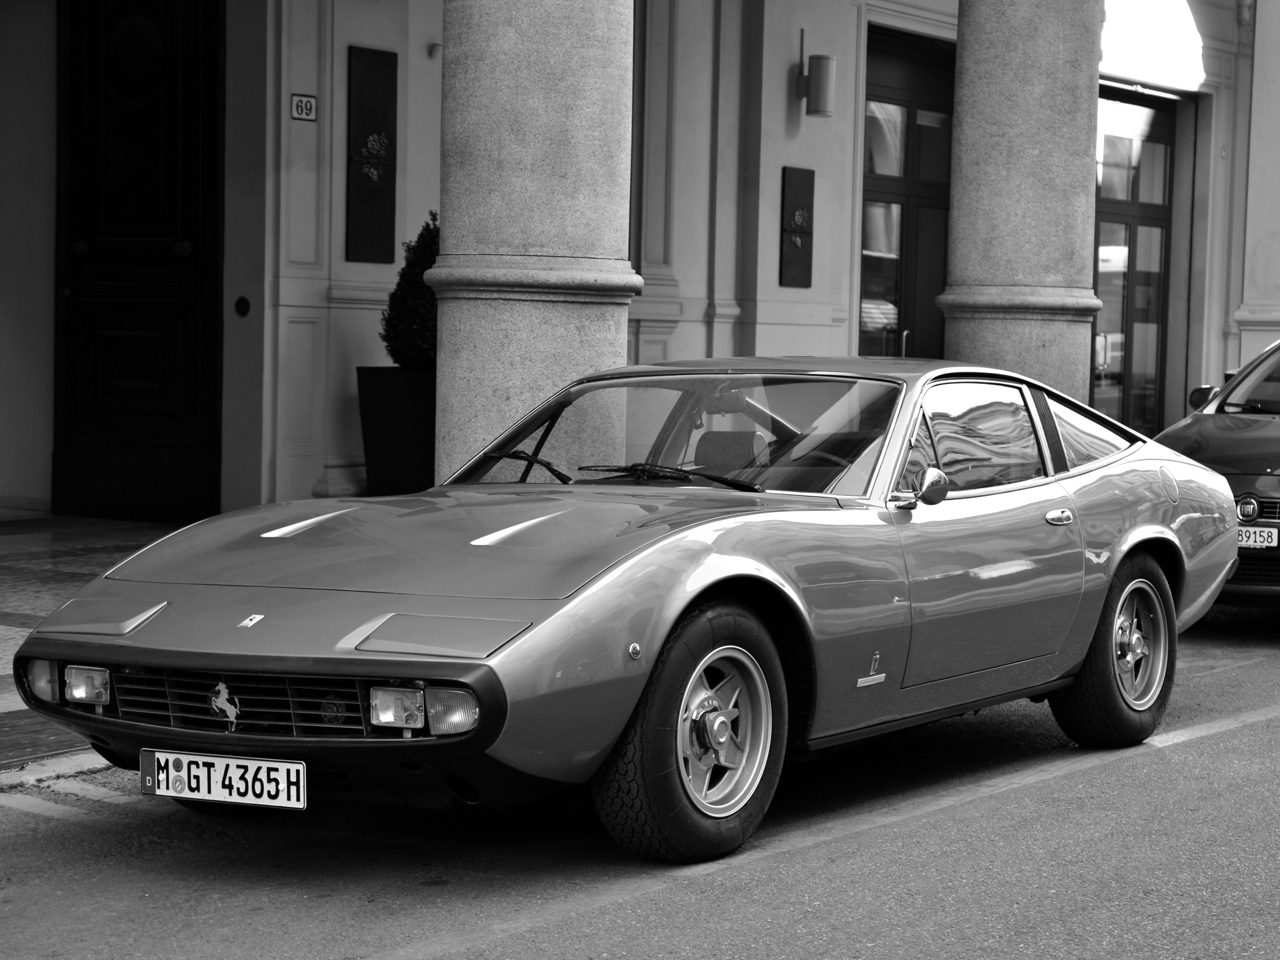 Ferrari 365 gtc4 '71...